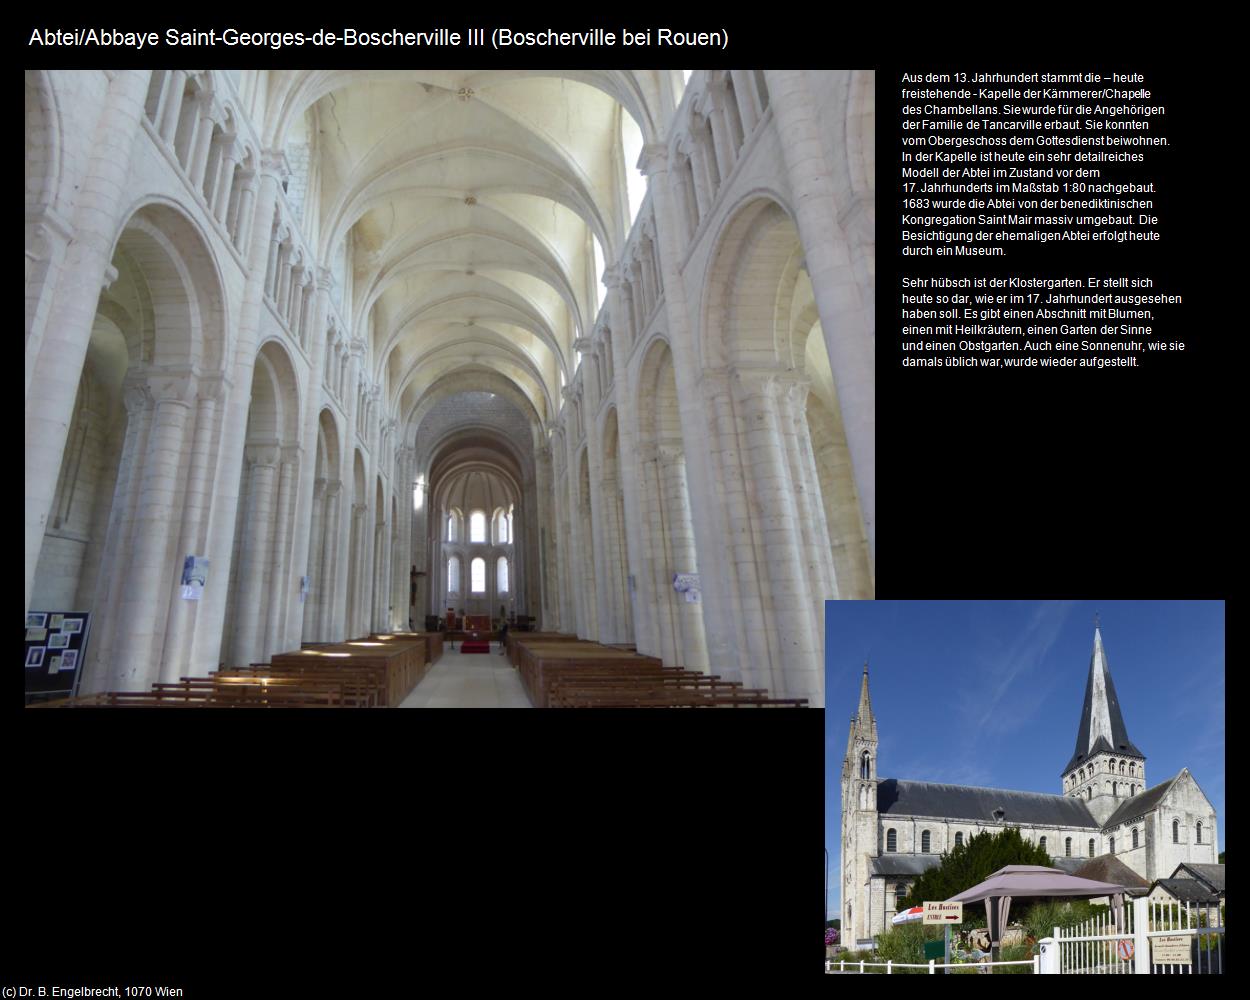 Abbaye Saint-Georges III (Boscherville bei Rouen (FR-NOR)) in Kulturatlas-FRANKREICH